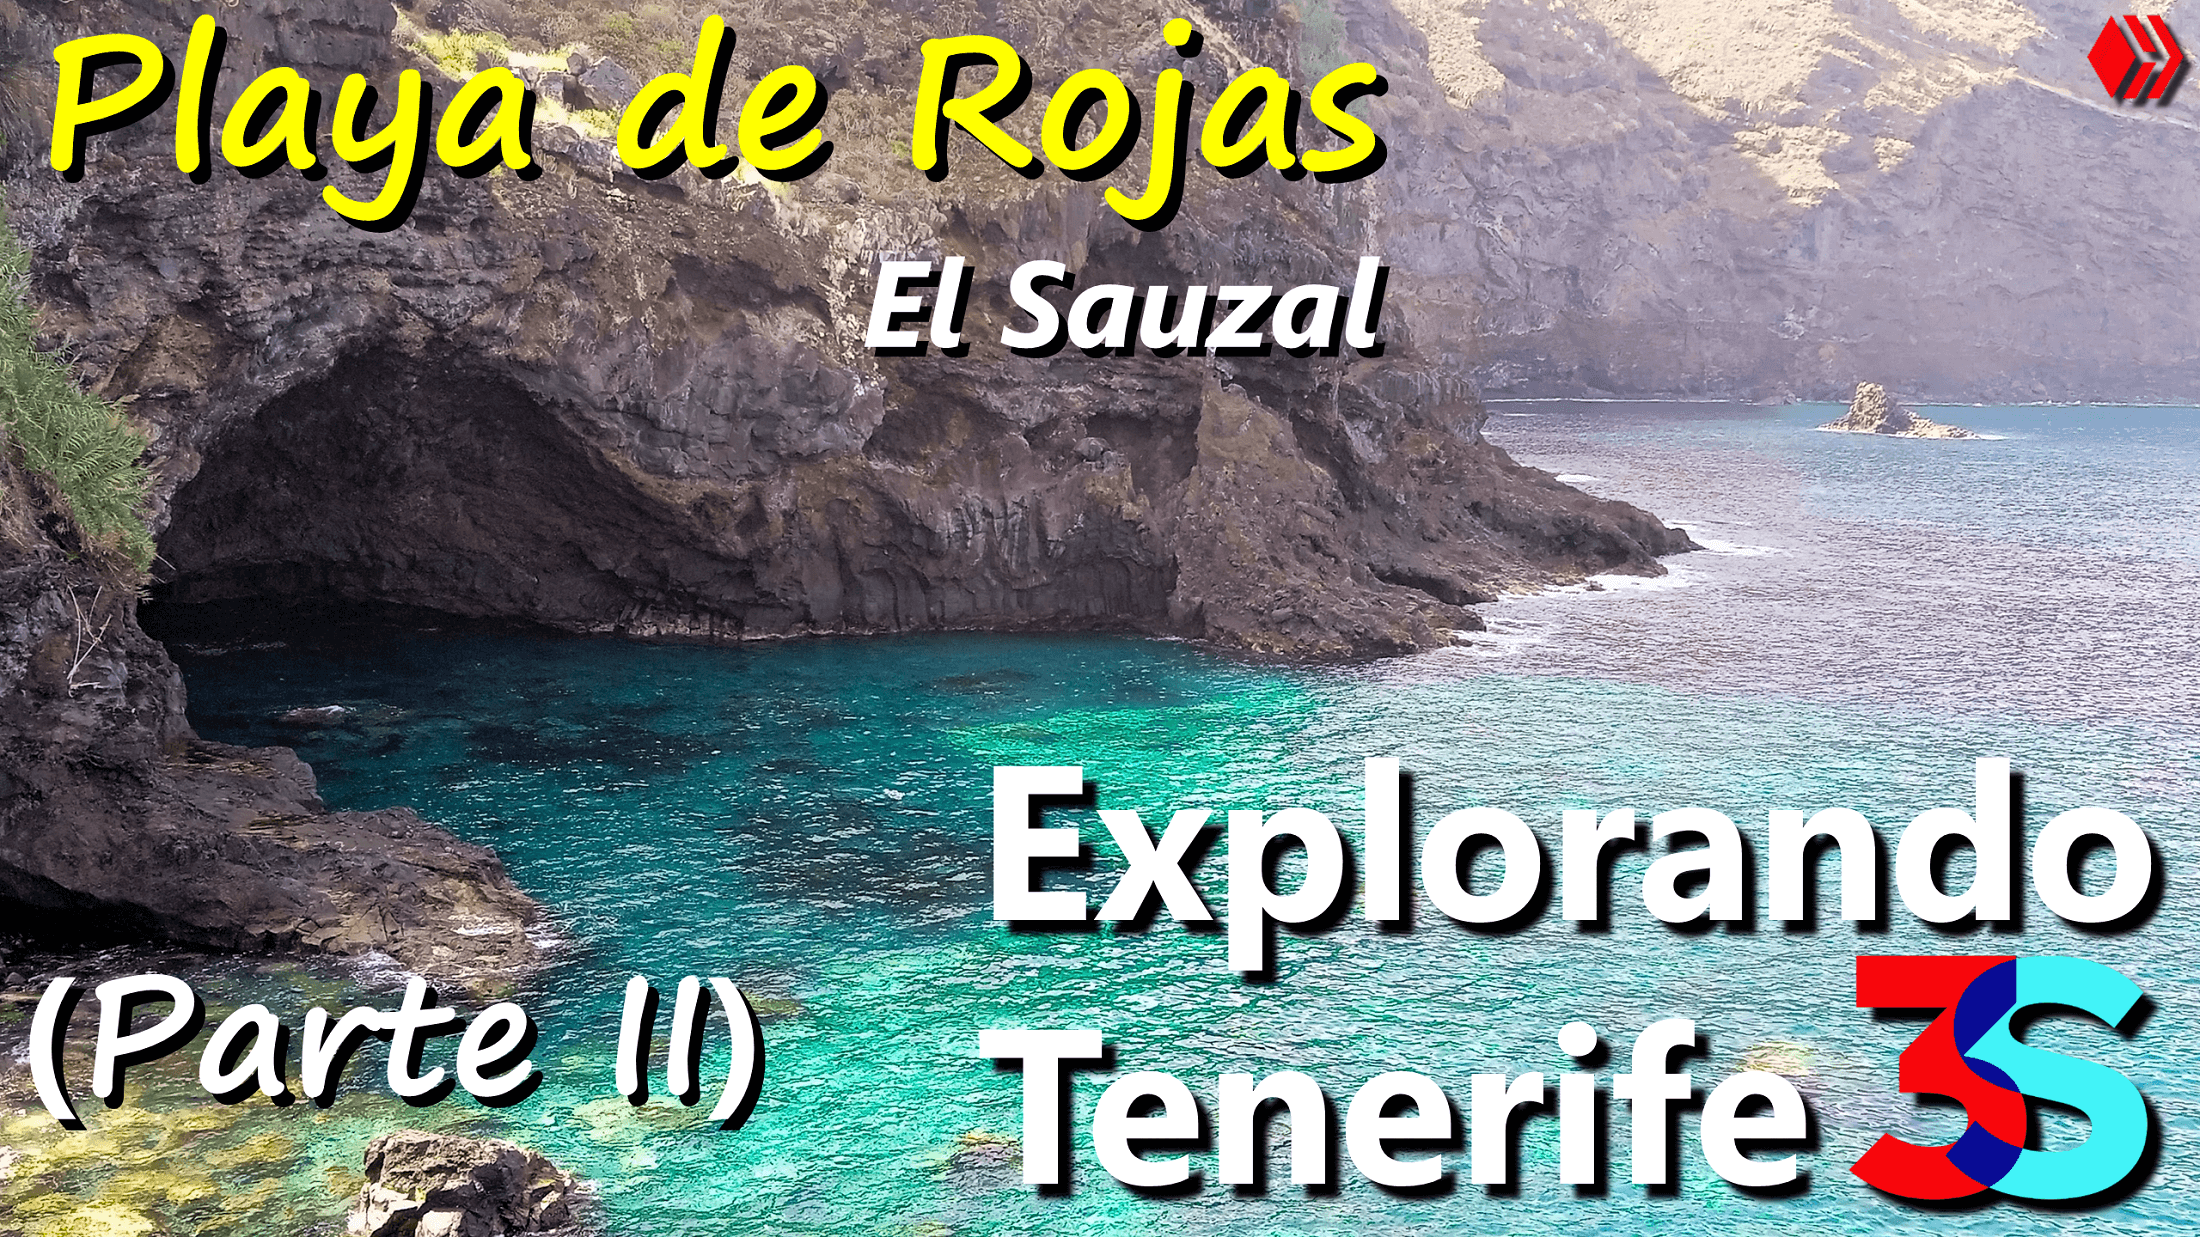 TENERIFE EN 3SPEAK Explorando Costa de El Sauzal PARTE II la PLAYA DE ROJAS Hive EspaVlog.png